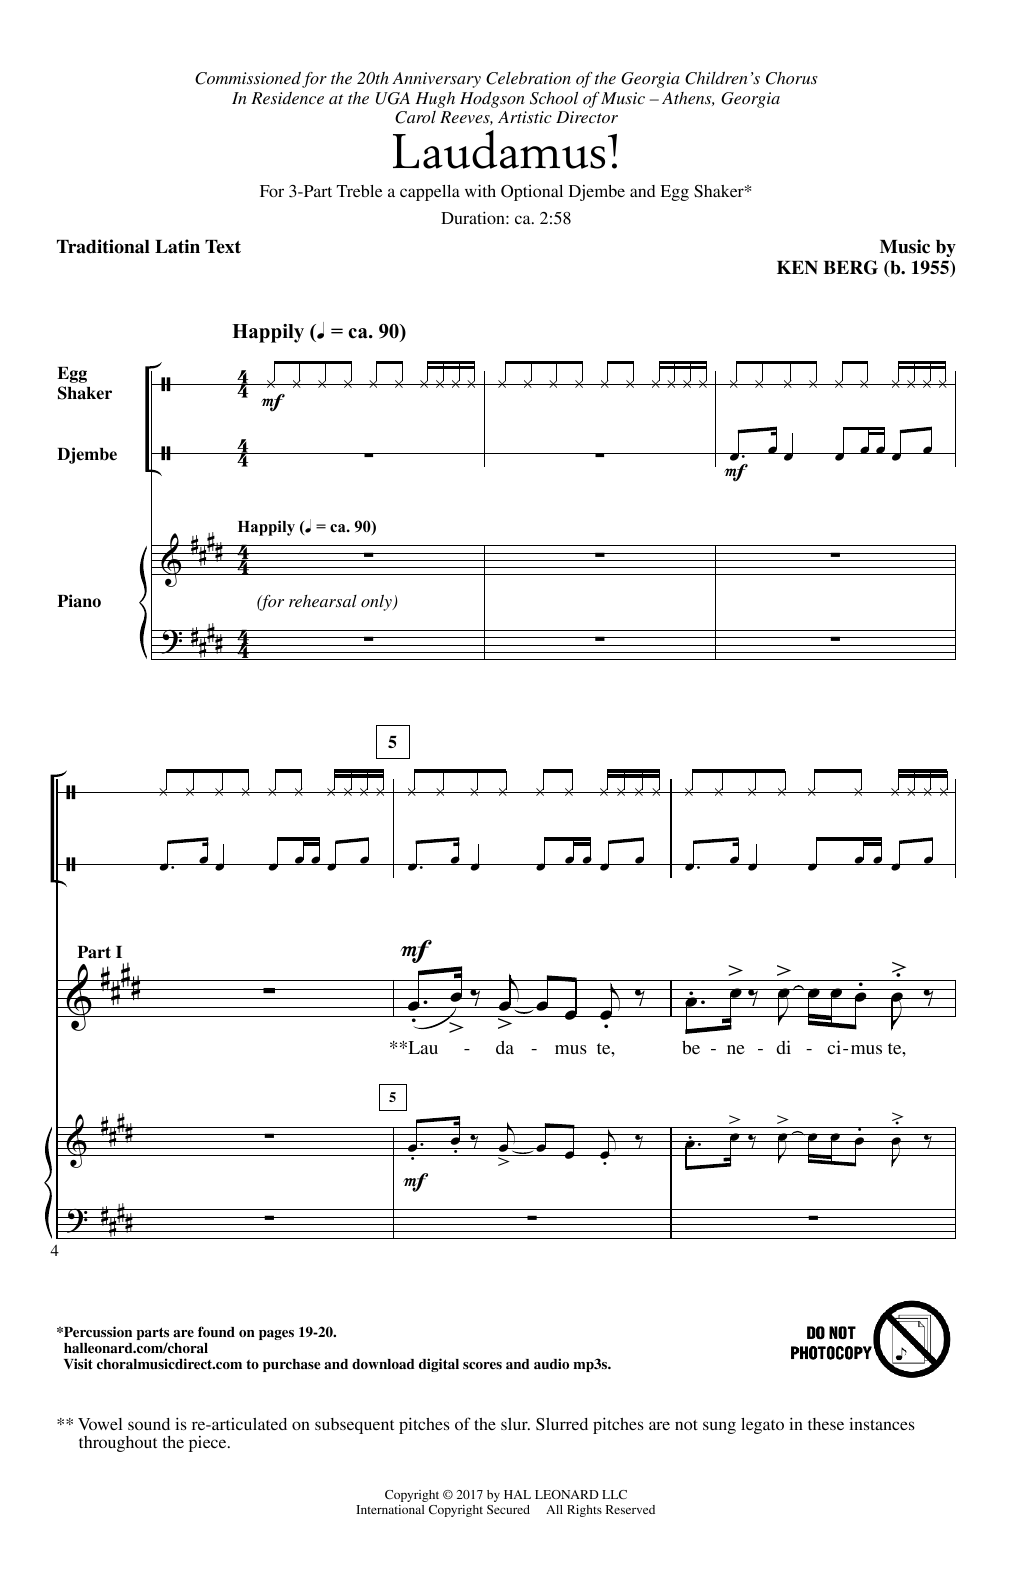 Ken Berg Laudamus! sheet music notes and chords arranged for 3-Part Treble Choir